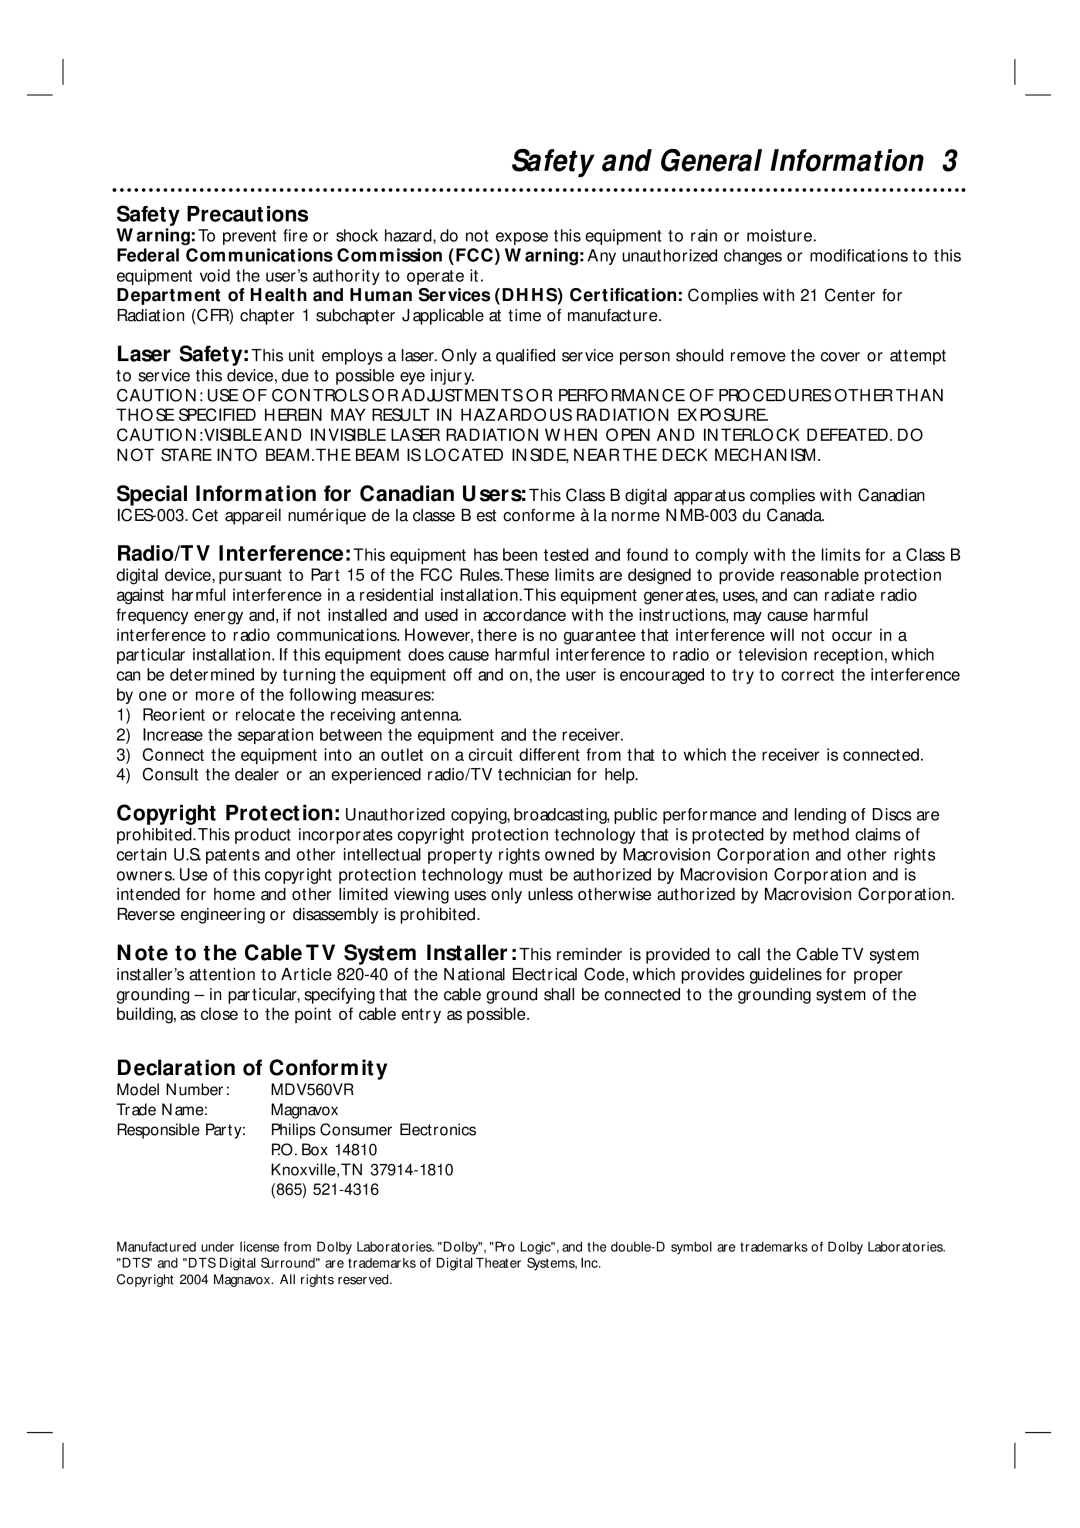 Magnavox MDV560VR/17 warranty Safety and General Information, Safety Precautions, Declaration of Conformity 